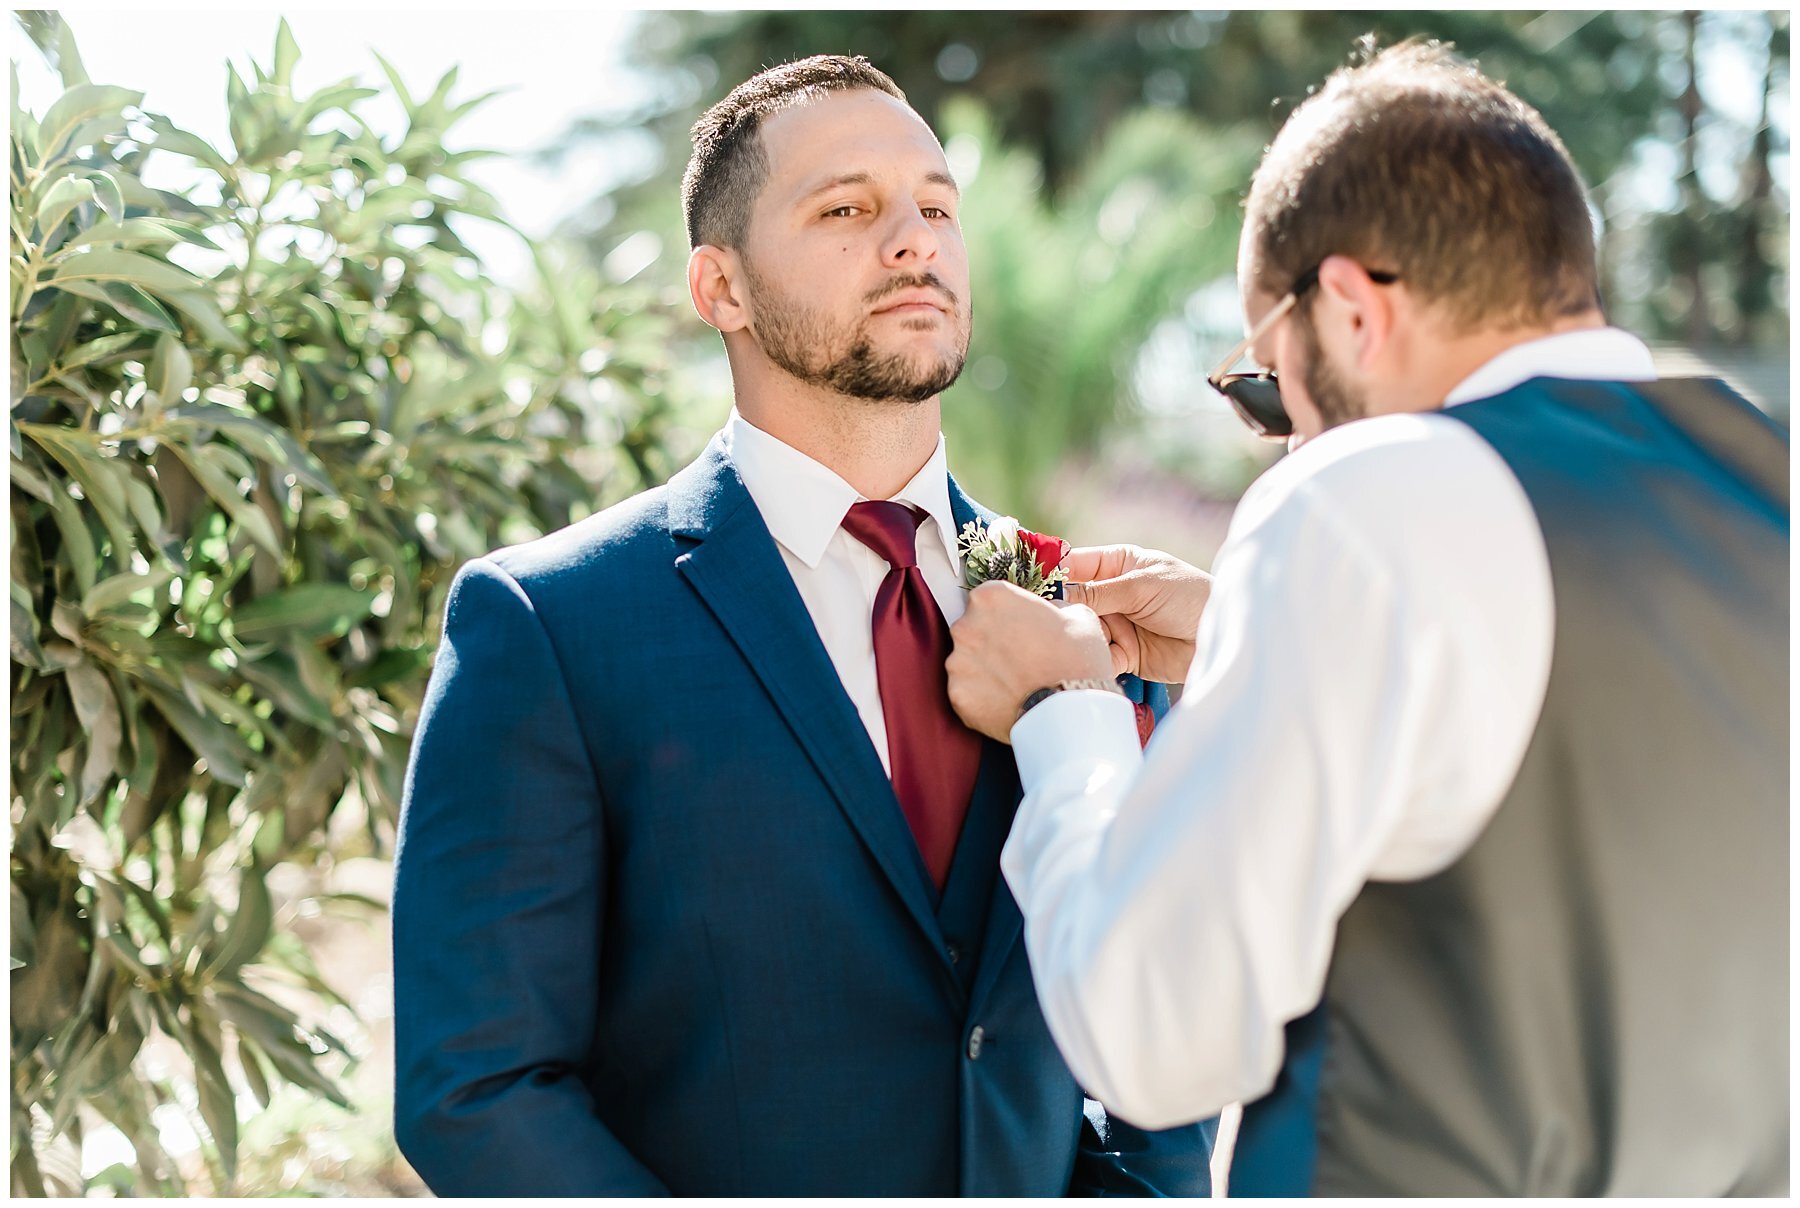  best man helping groom with flower 